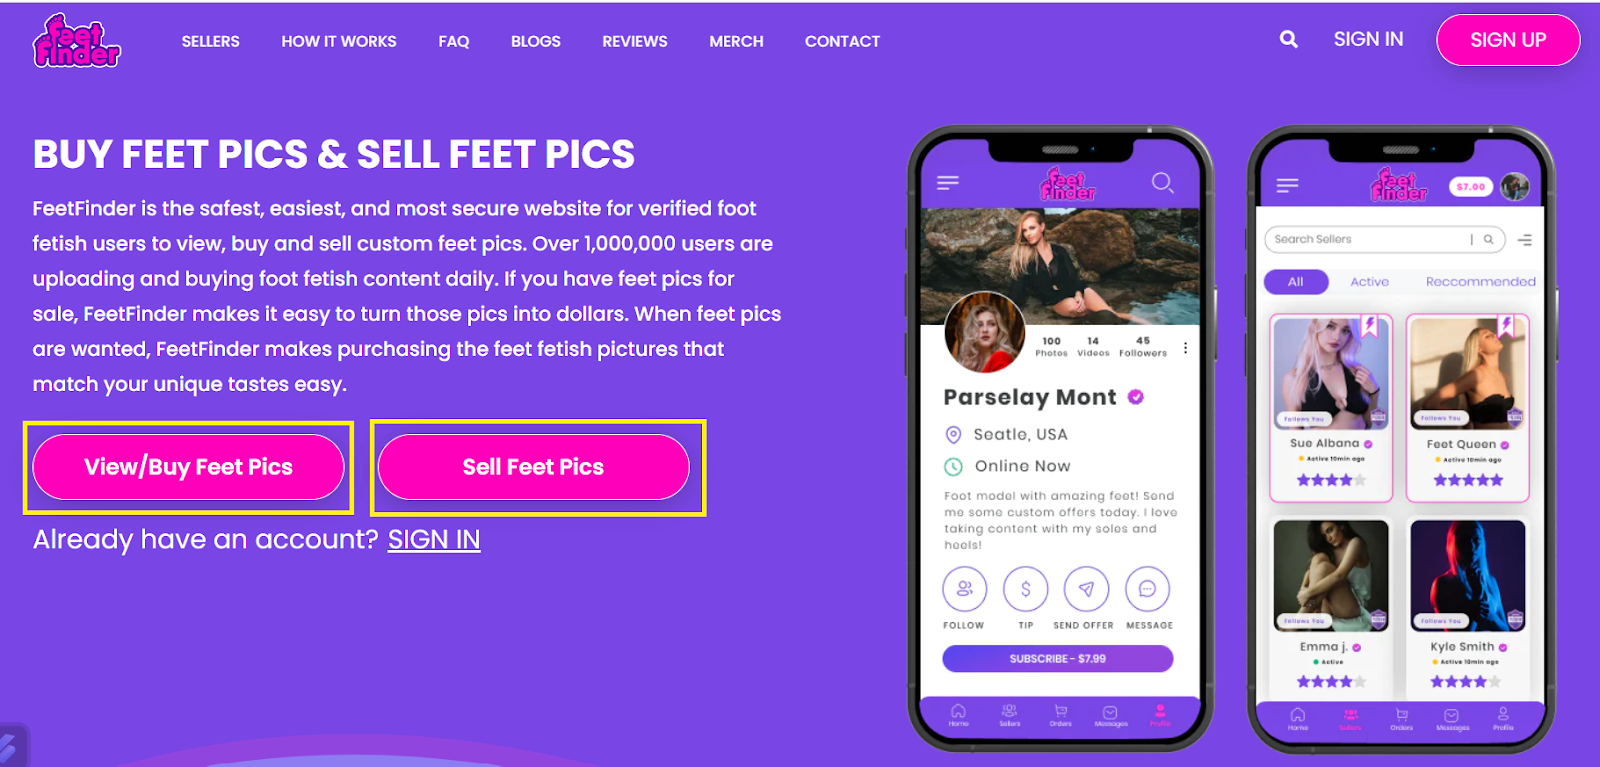 Buy Feet Pics or sell Feet Pics on FeetFinder